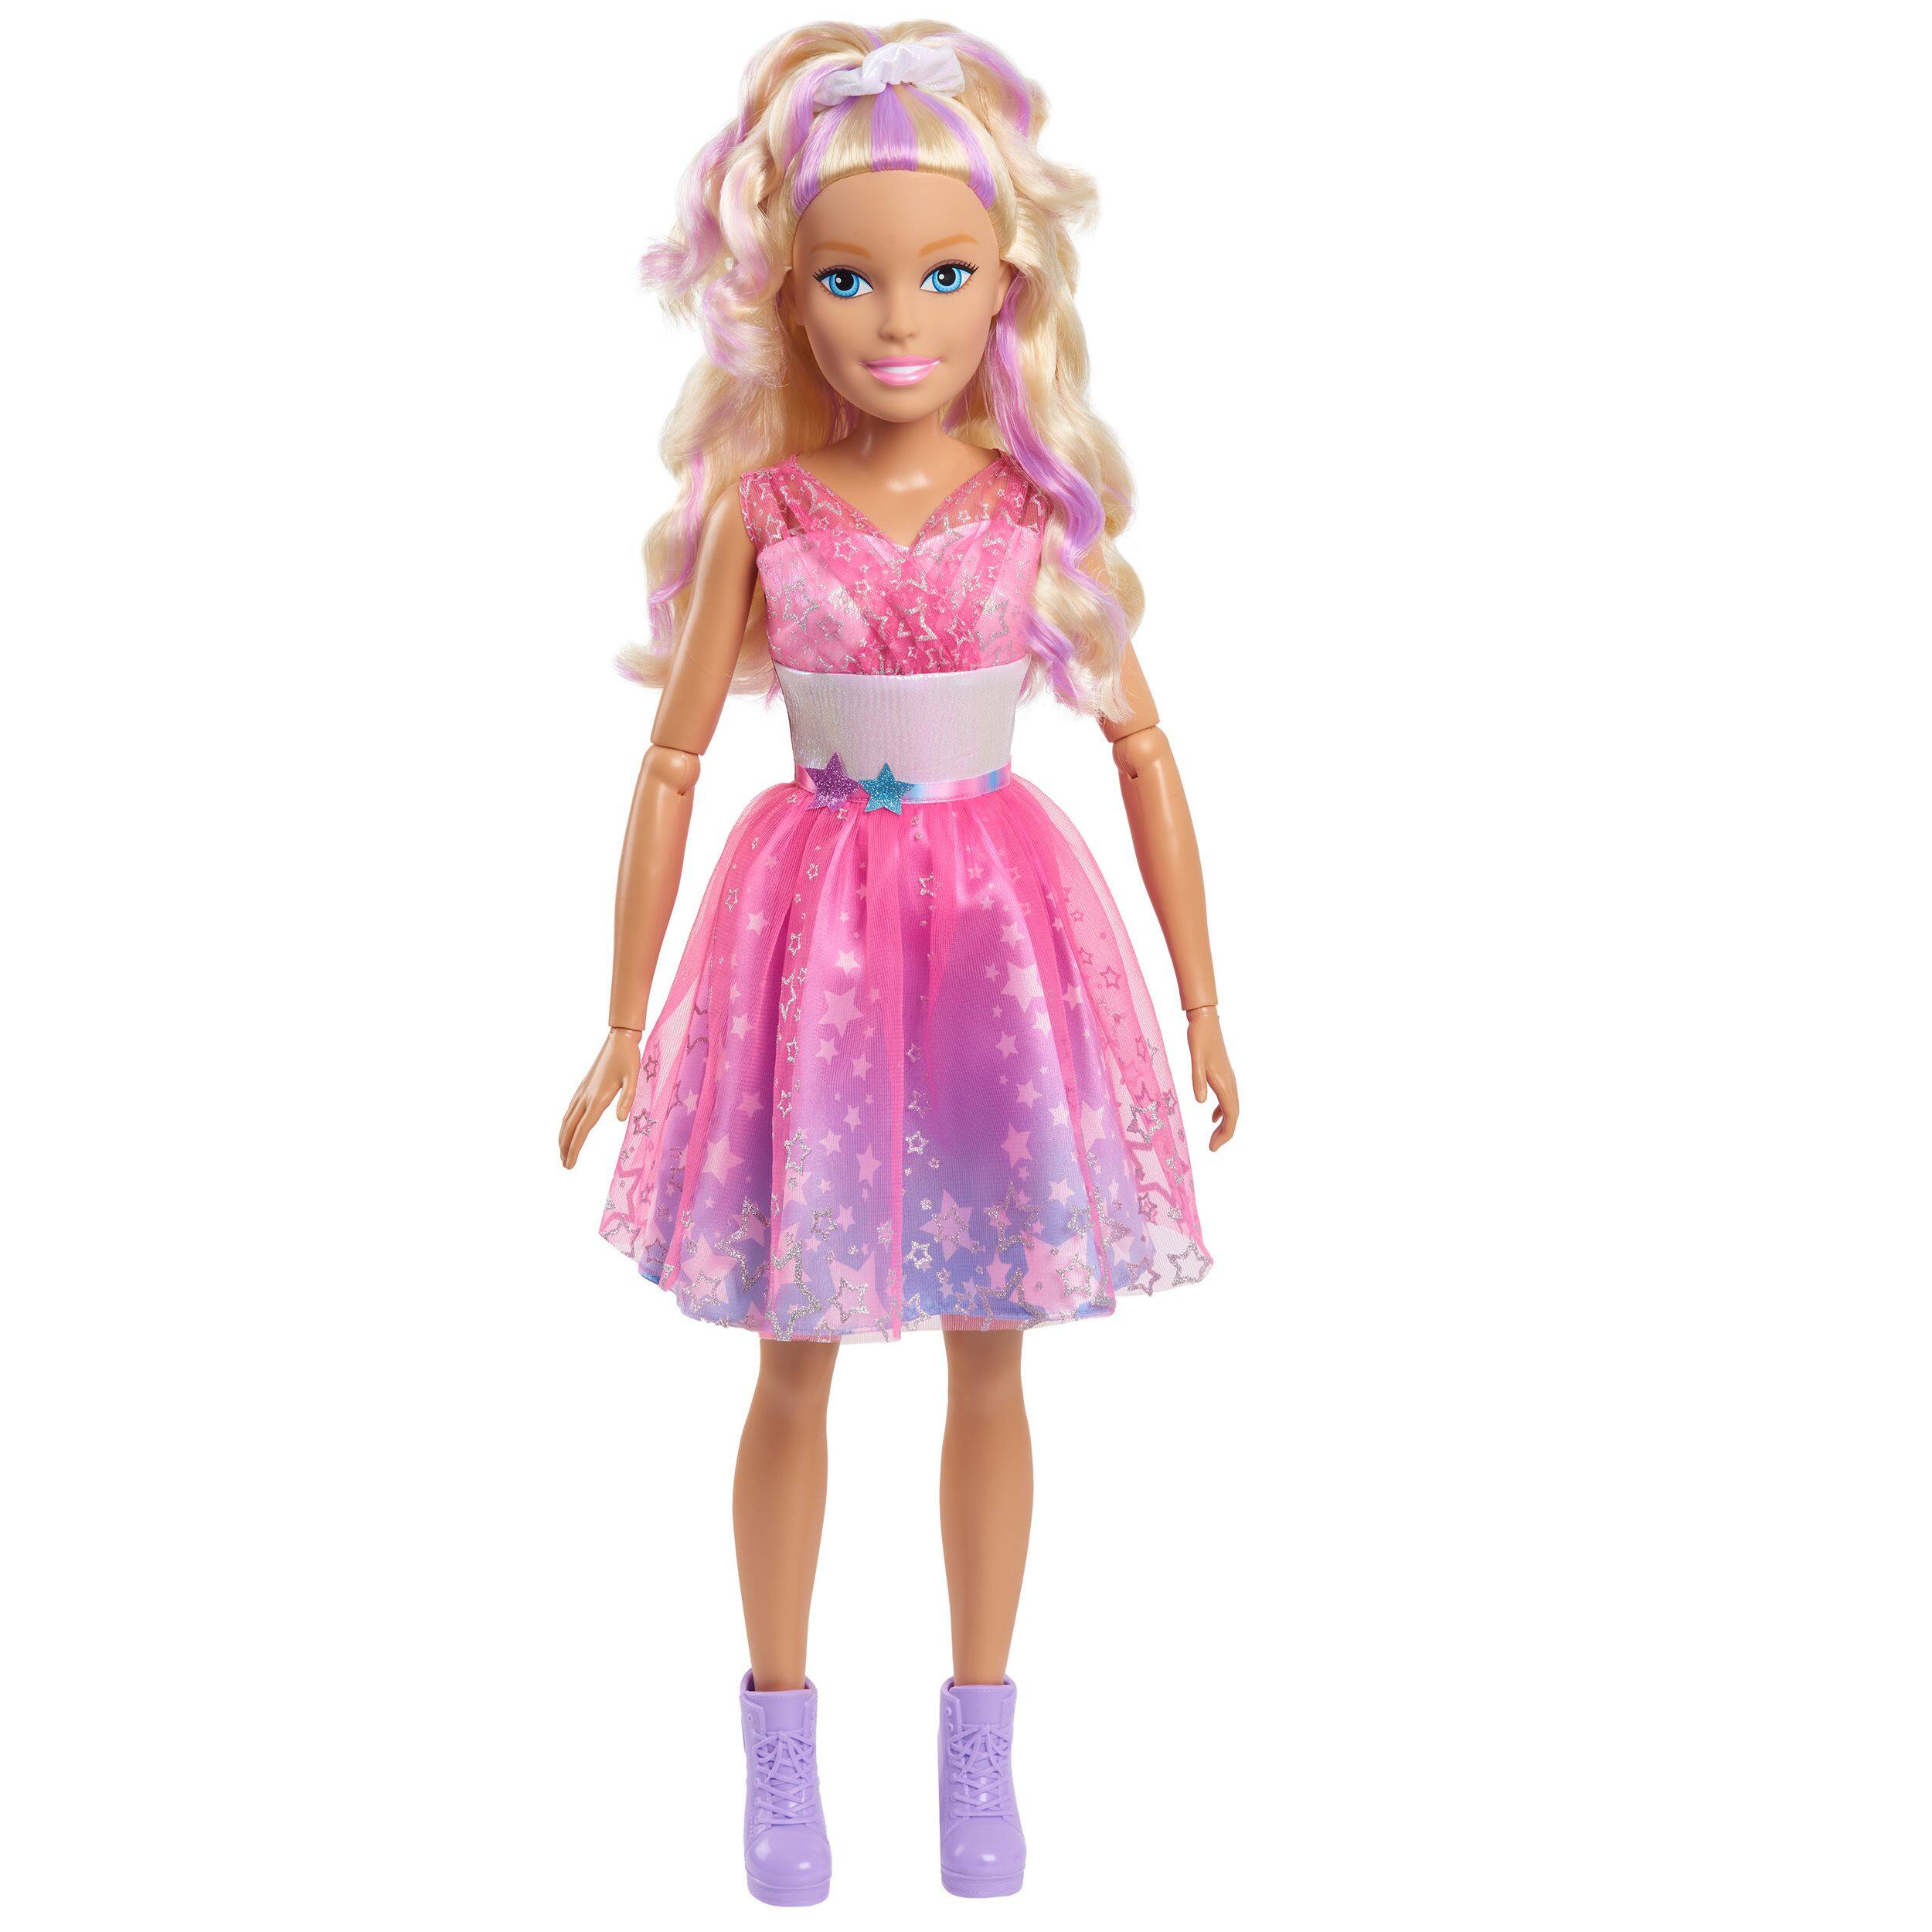 Barbie® Best Friend Modern-Day Princess Fashion Doll Toy For Kids